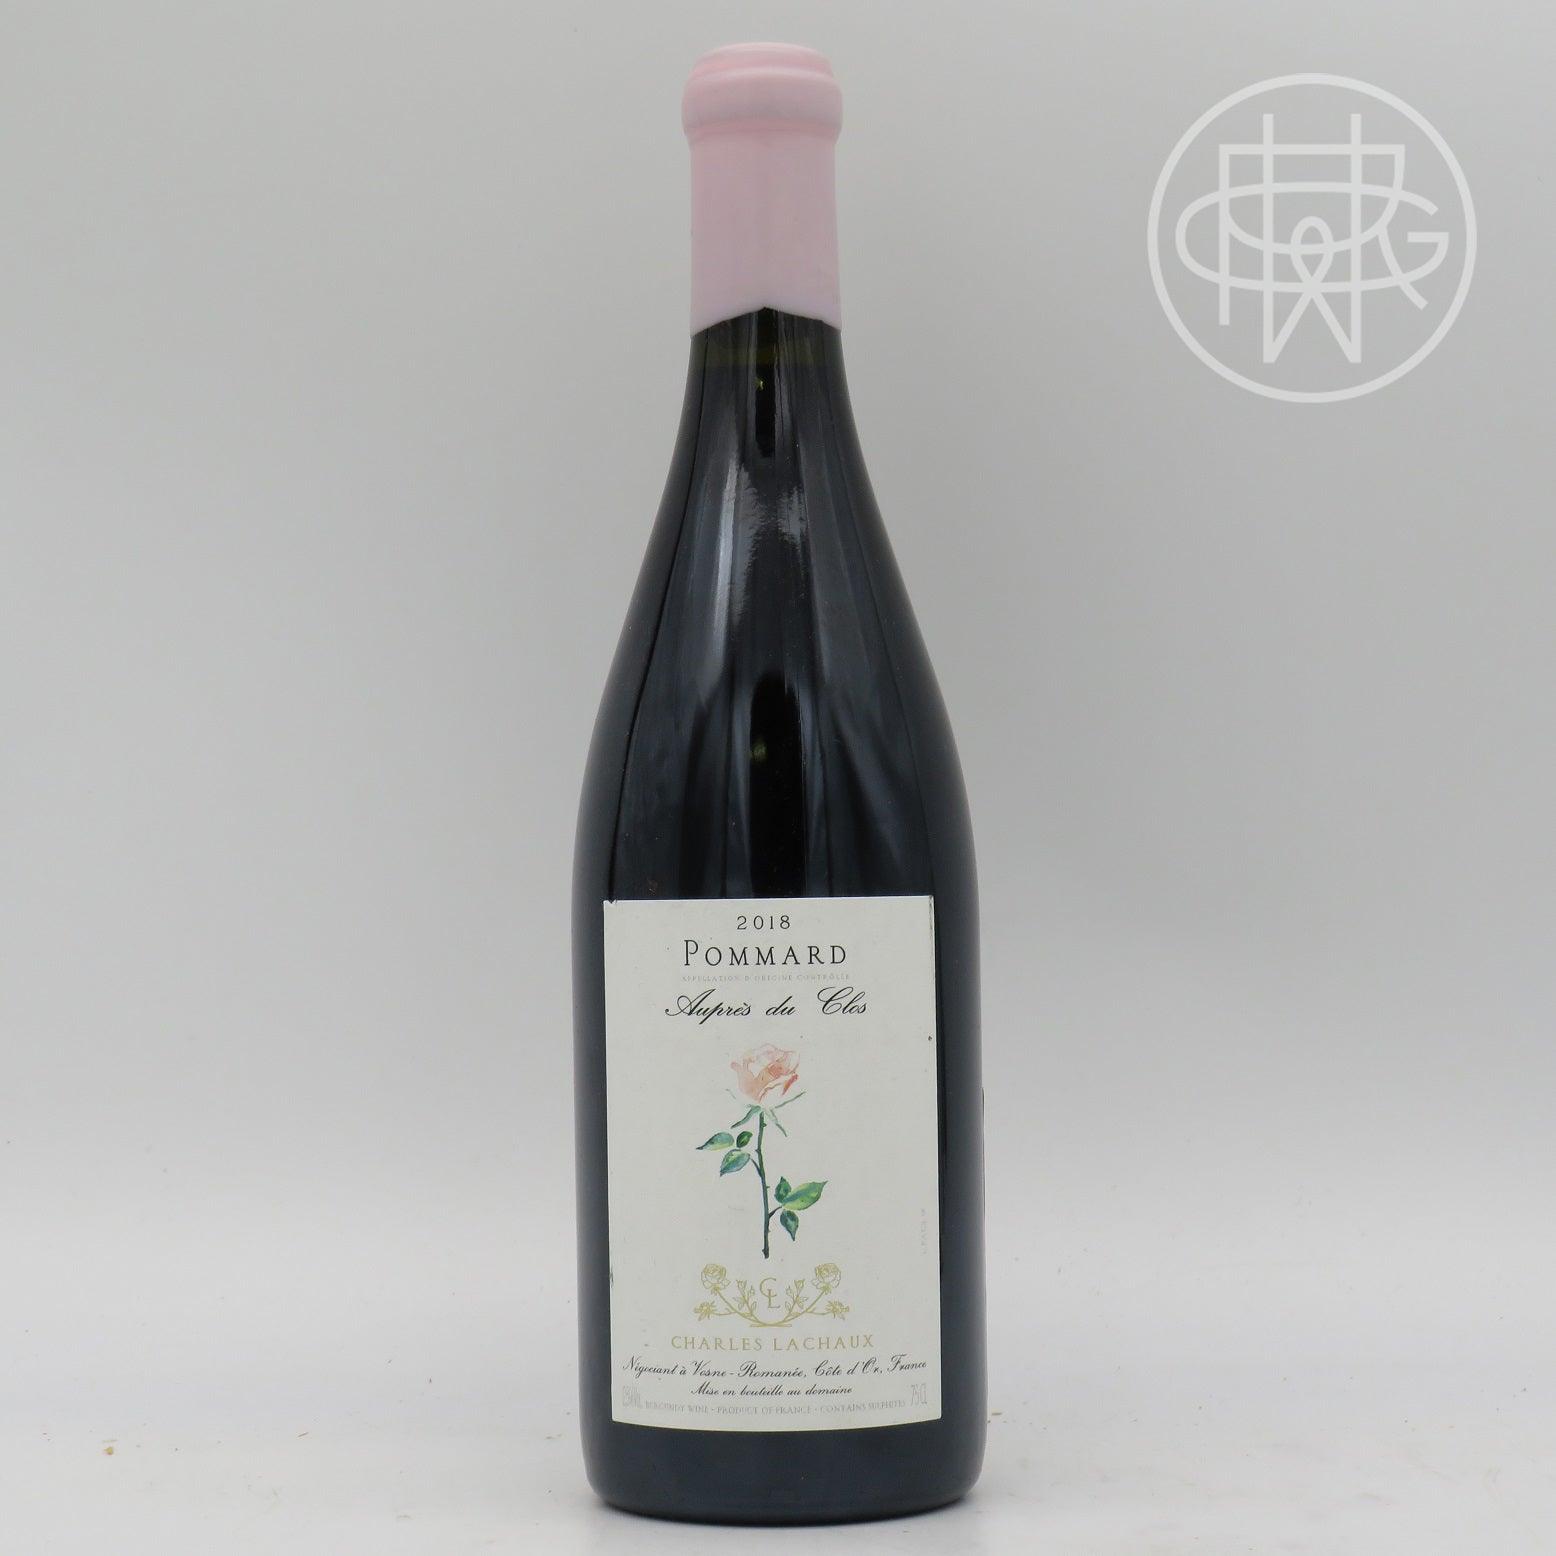 Charles Lachaux Pommard Aupres du Clos 2018 750mL - GRW Wine Collection